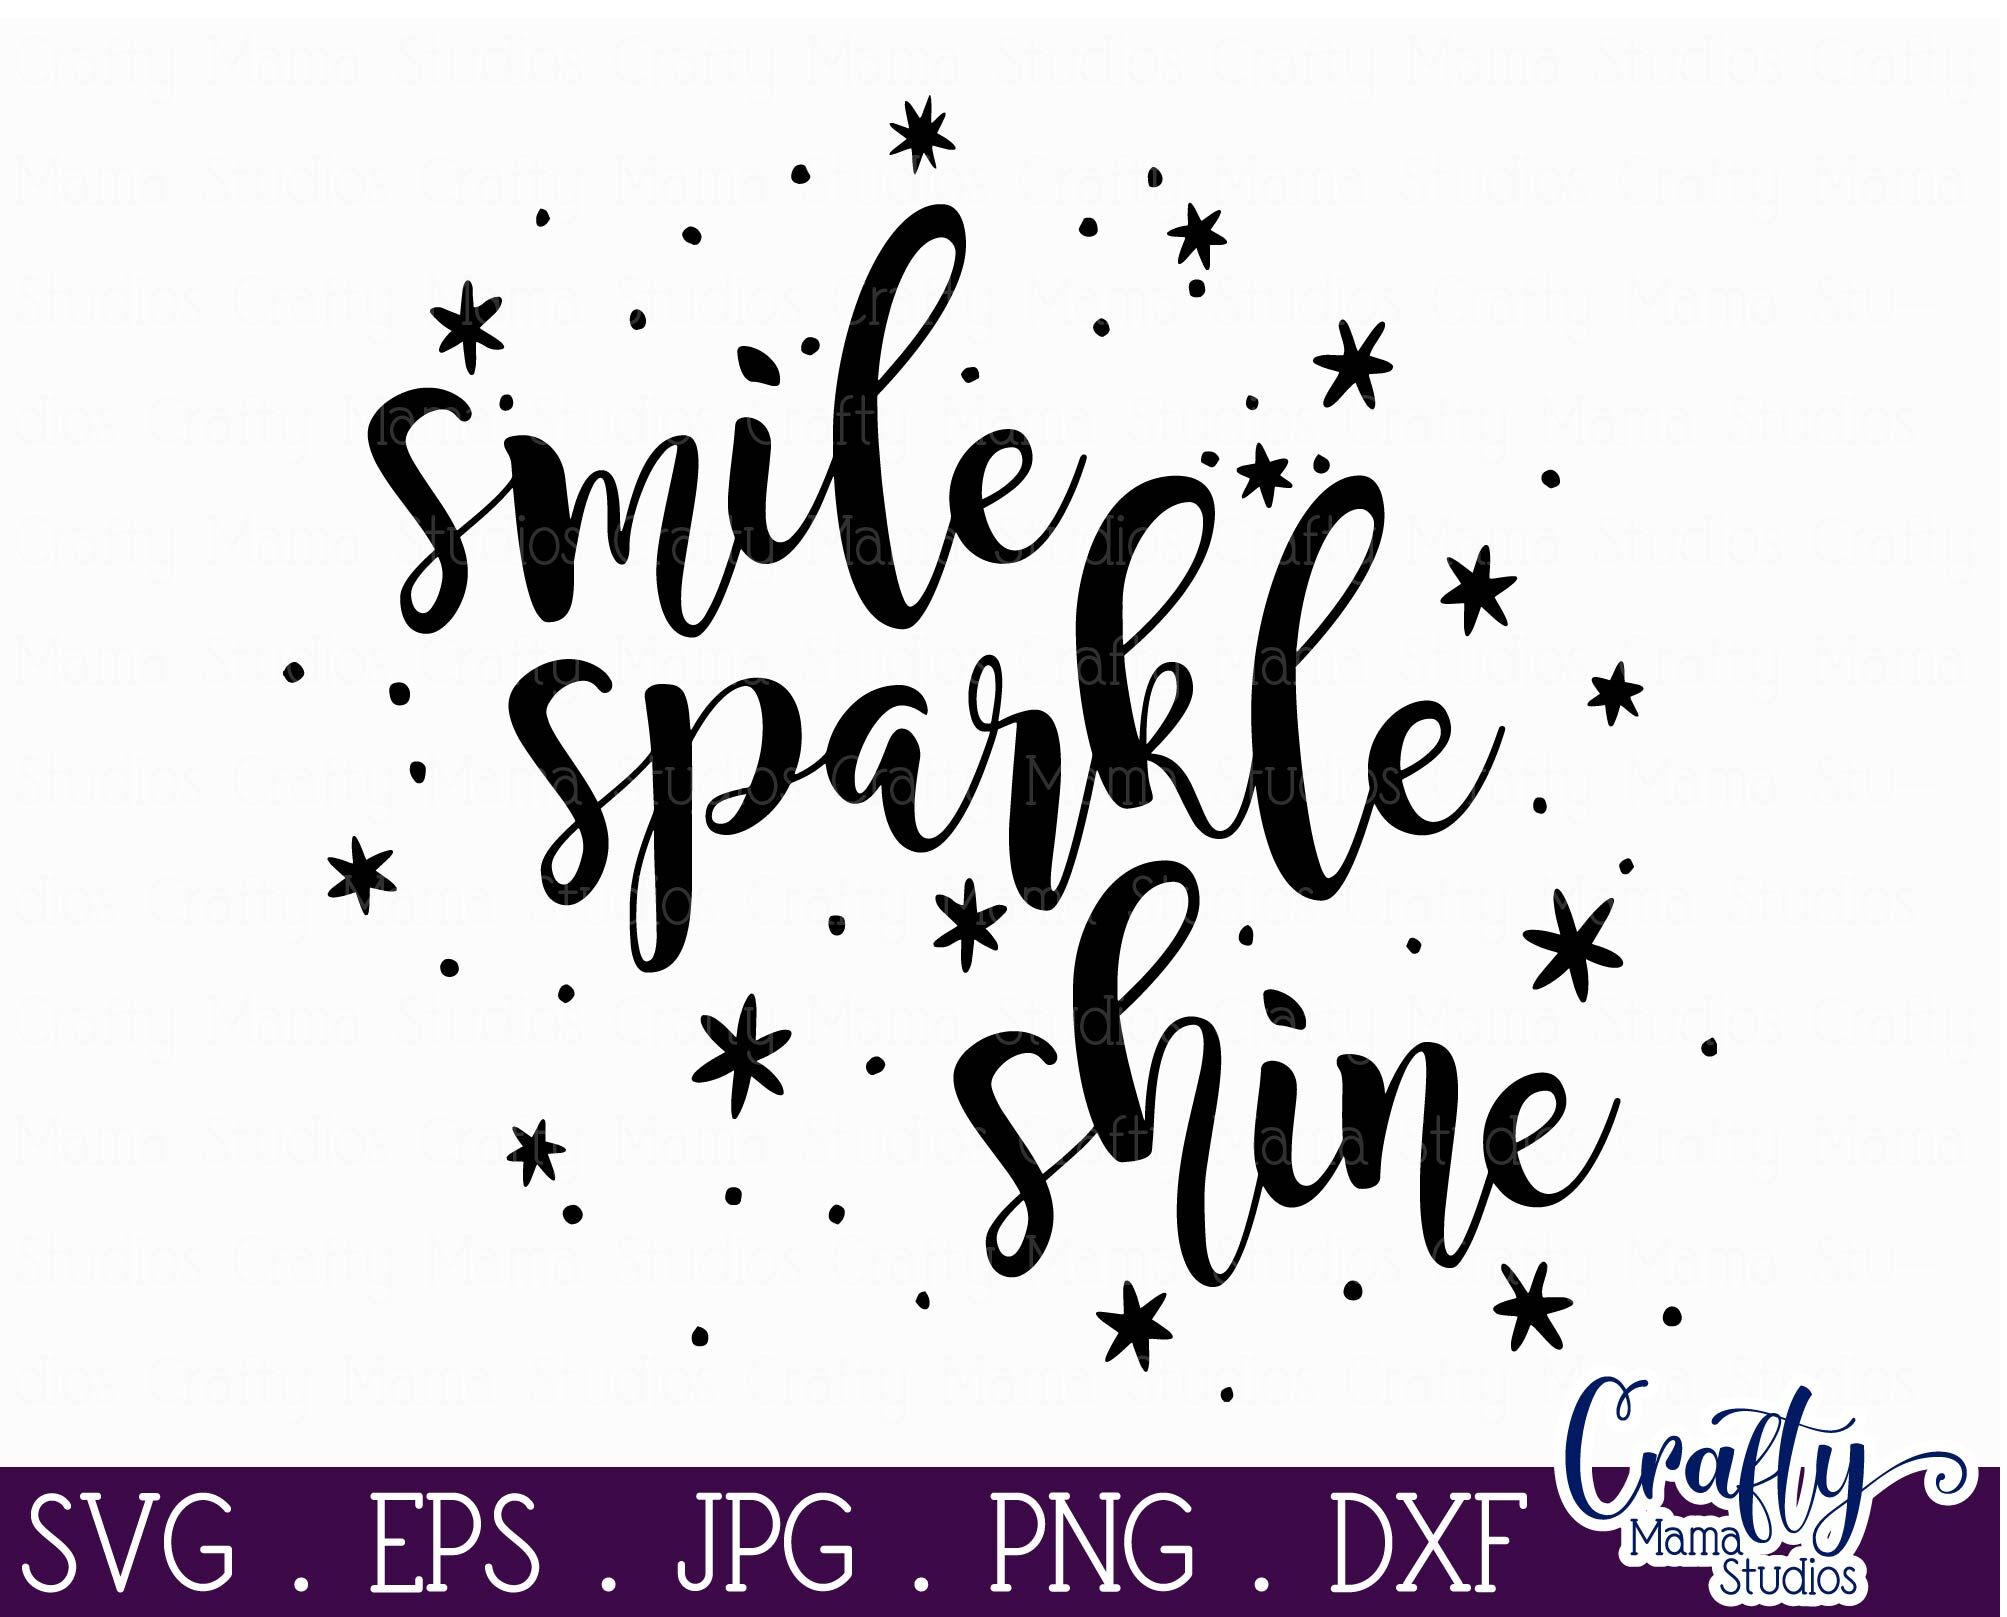 Download Born To Sparkle Girl Power Svg Smile Sparkle Shine Svg By Crafty Mama Studios Thehungryjpeg Com